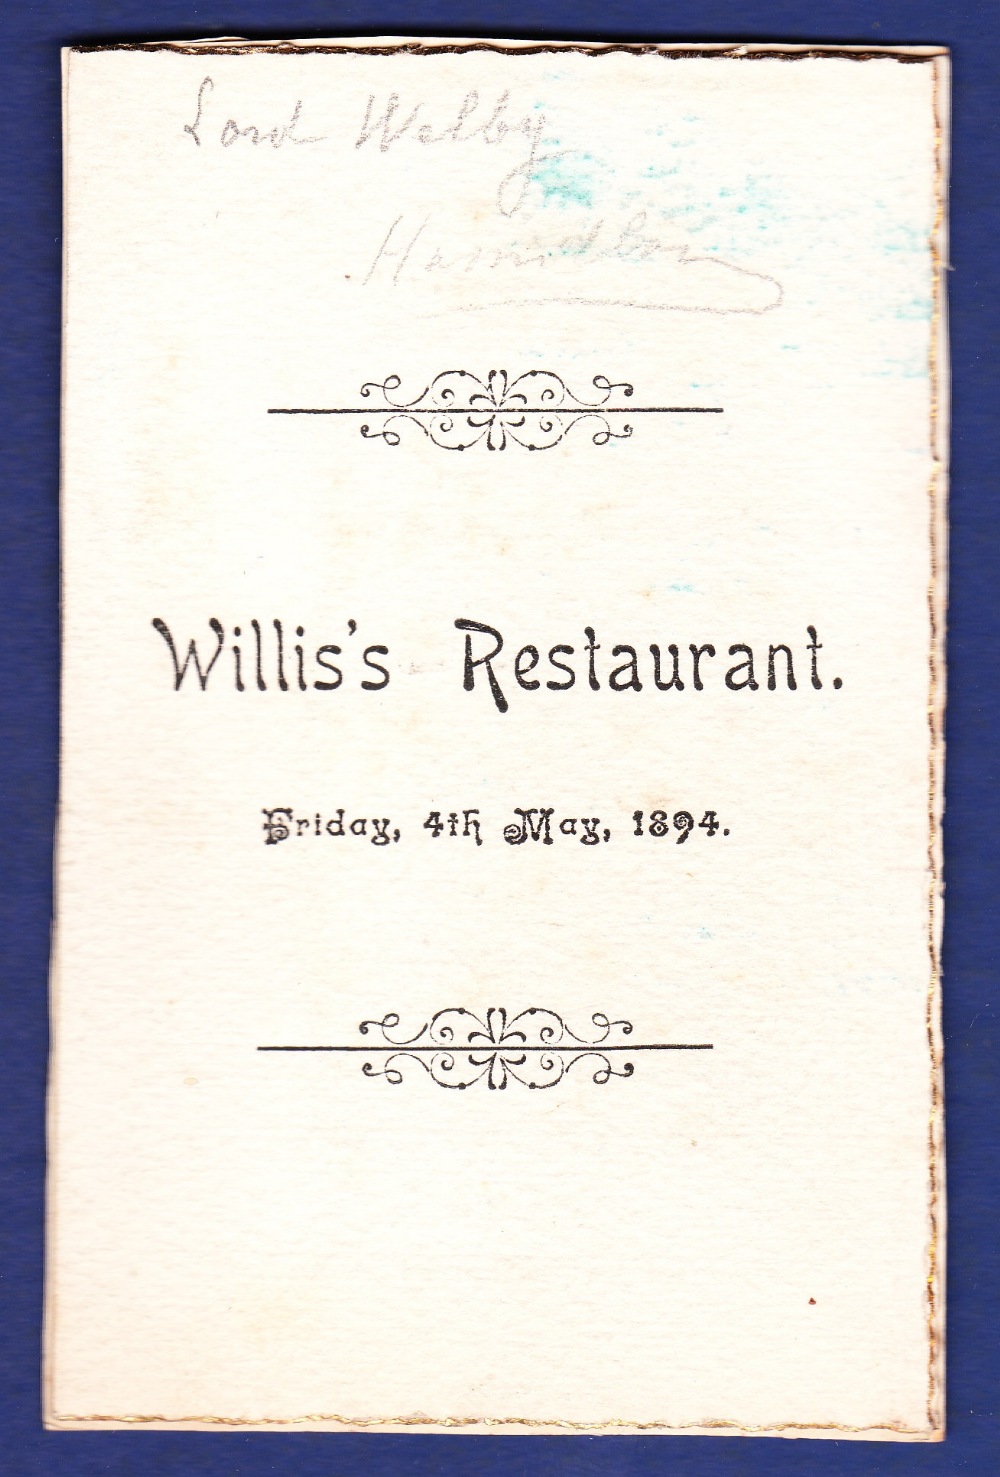 Menu - 1894 (4 May) Willis's Restaurant Printed Menu, Edouard. m/s Lord Welby.